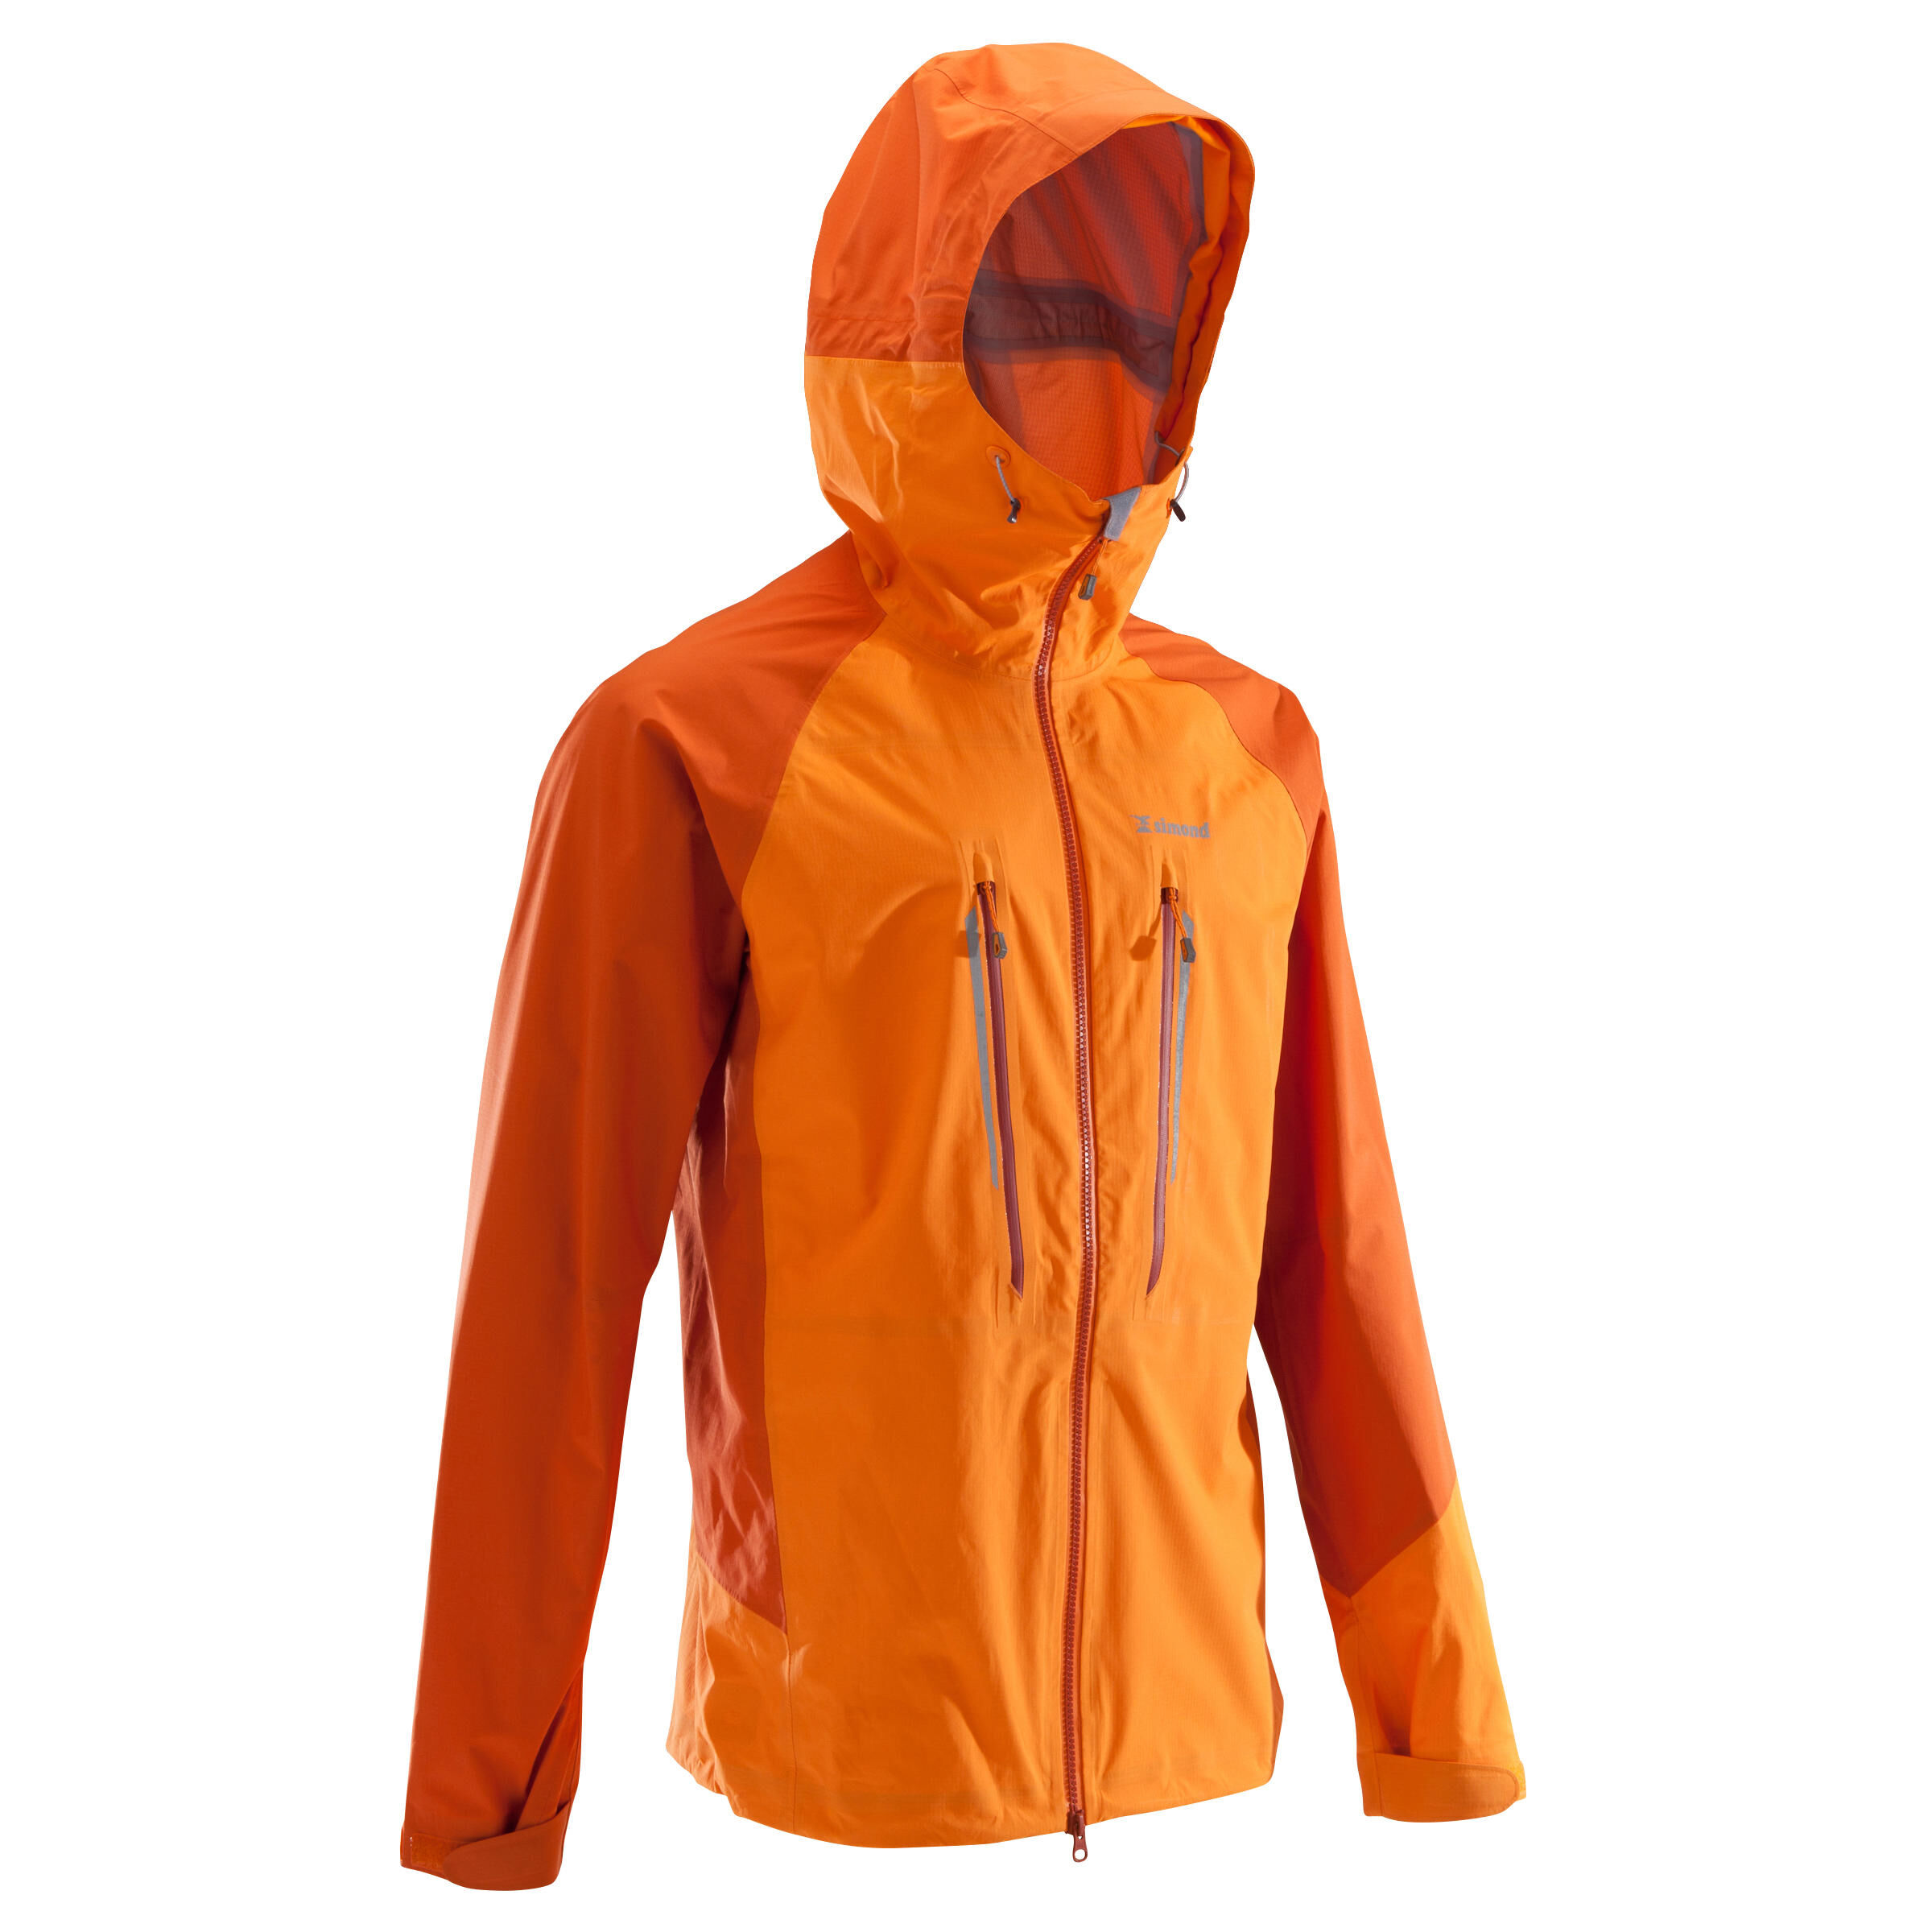 SIMOND Men's Mountaineering Waterproof Jacket - Alpinism Light Orange